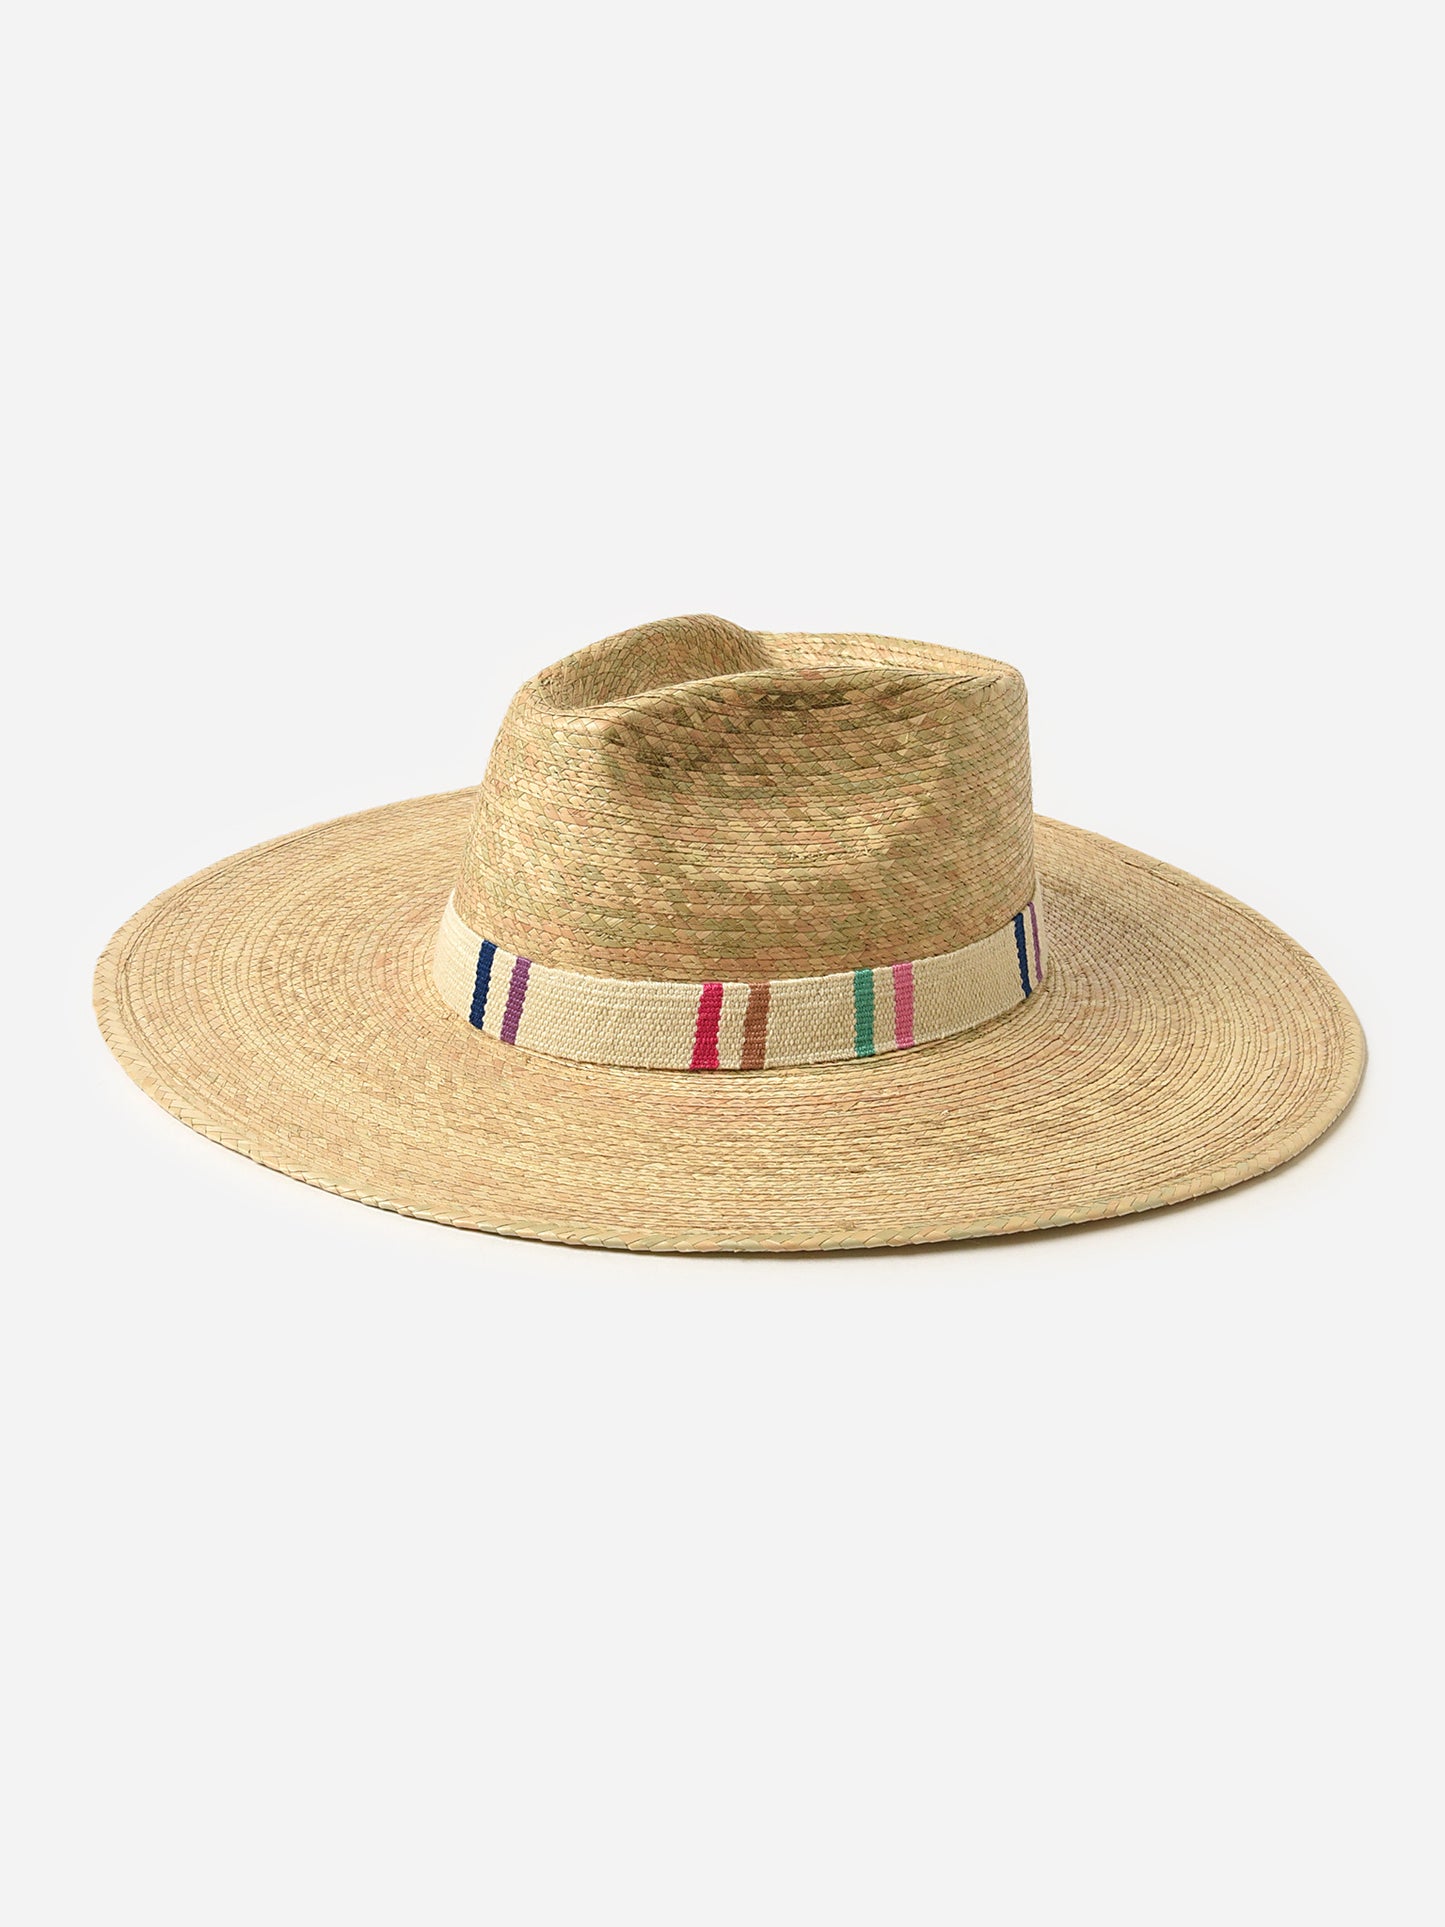 Sunshine Tienda Women's Irma Palm Hat